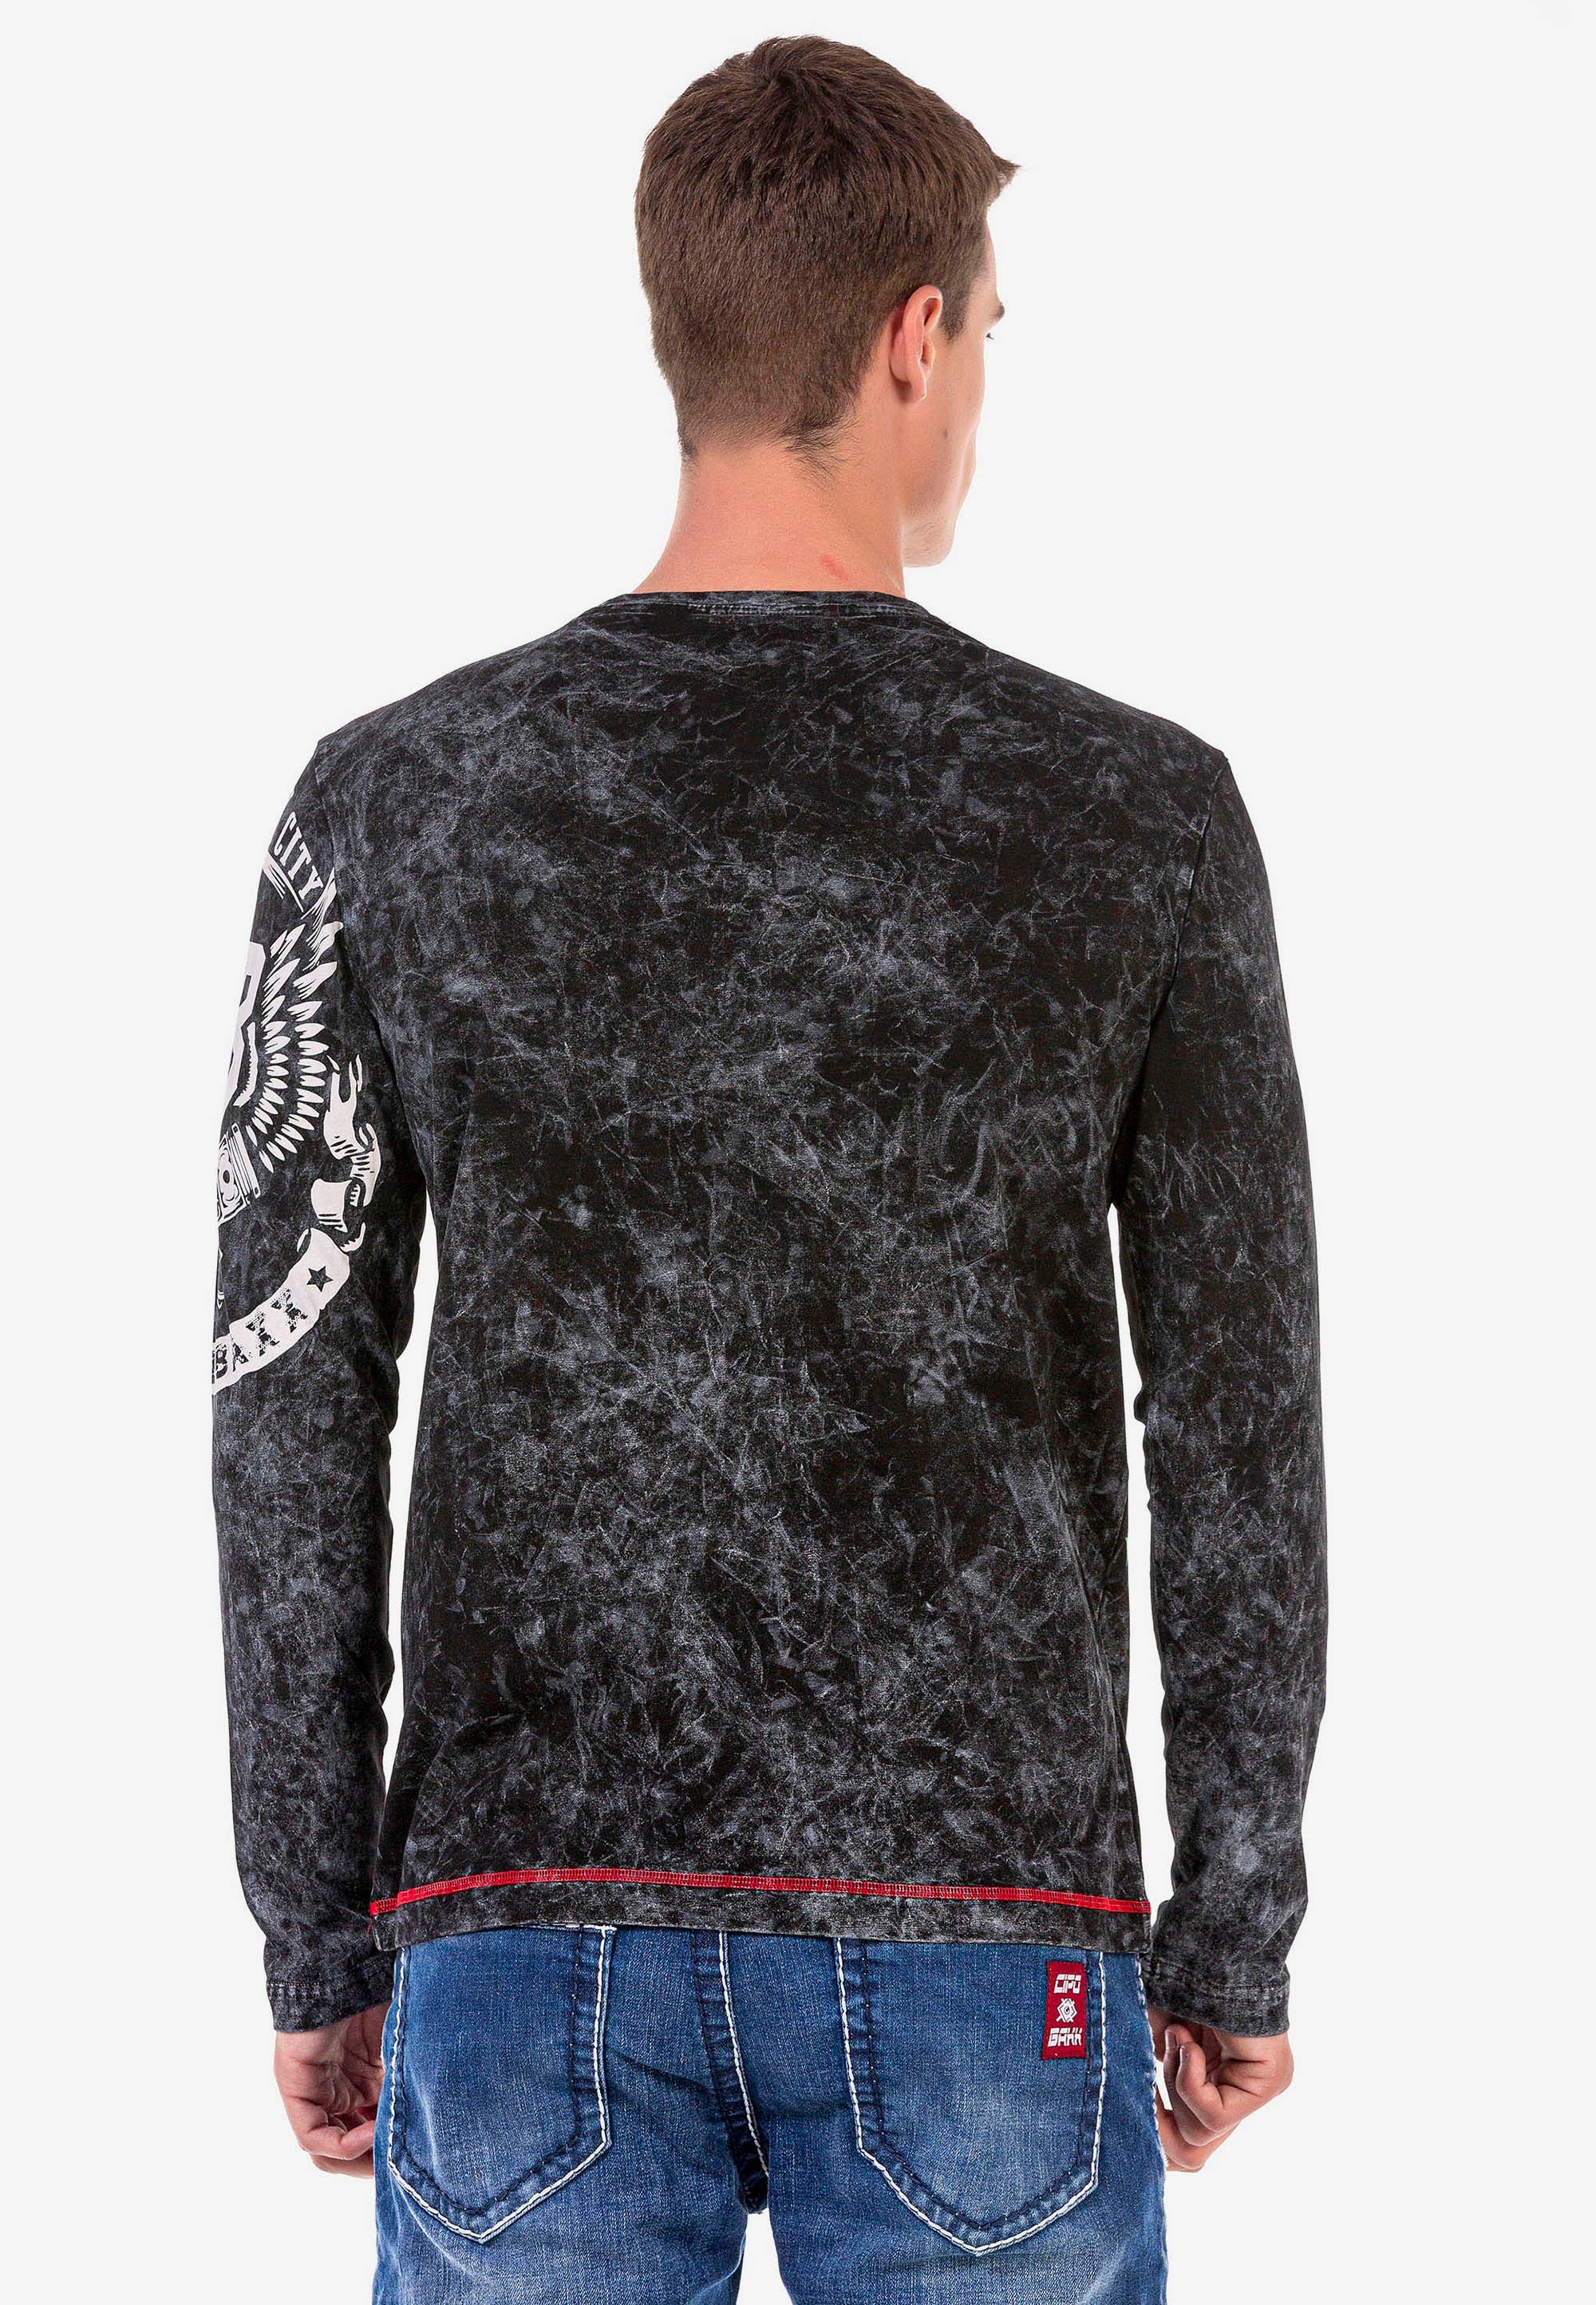 Markenprint Baxx schwarz mit coolem Cipo & Langarmshirt